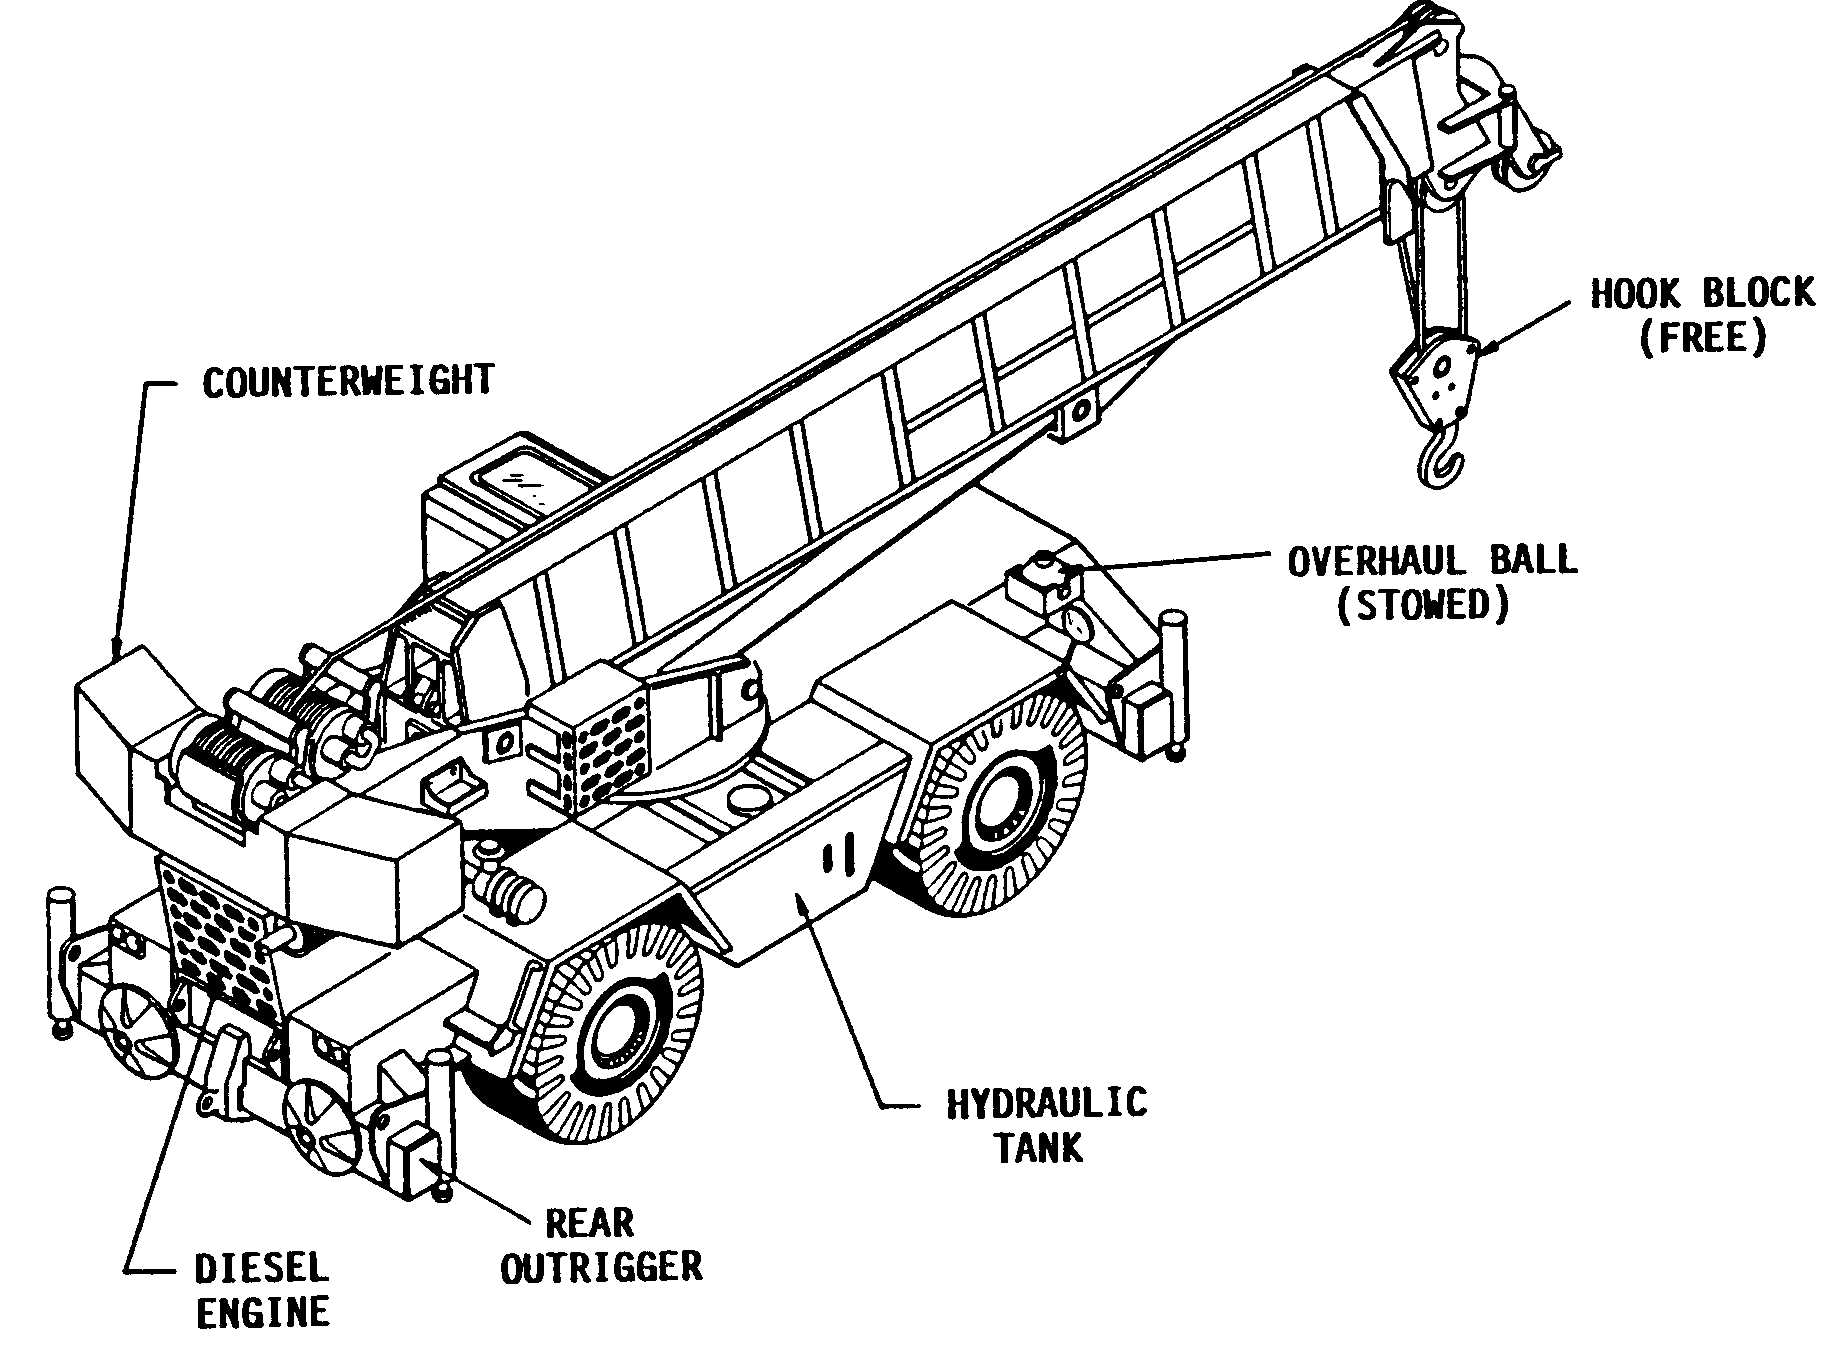 Hydraulic Crane Parts Diagram | Wiring Diagram